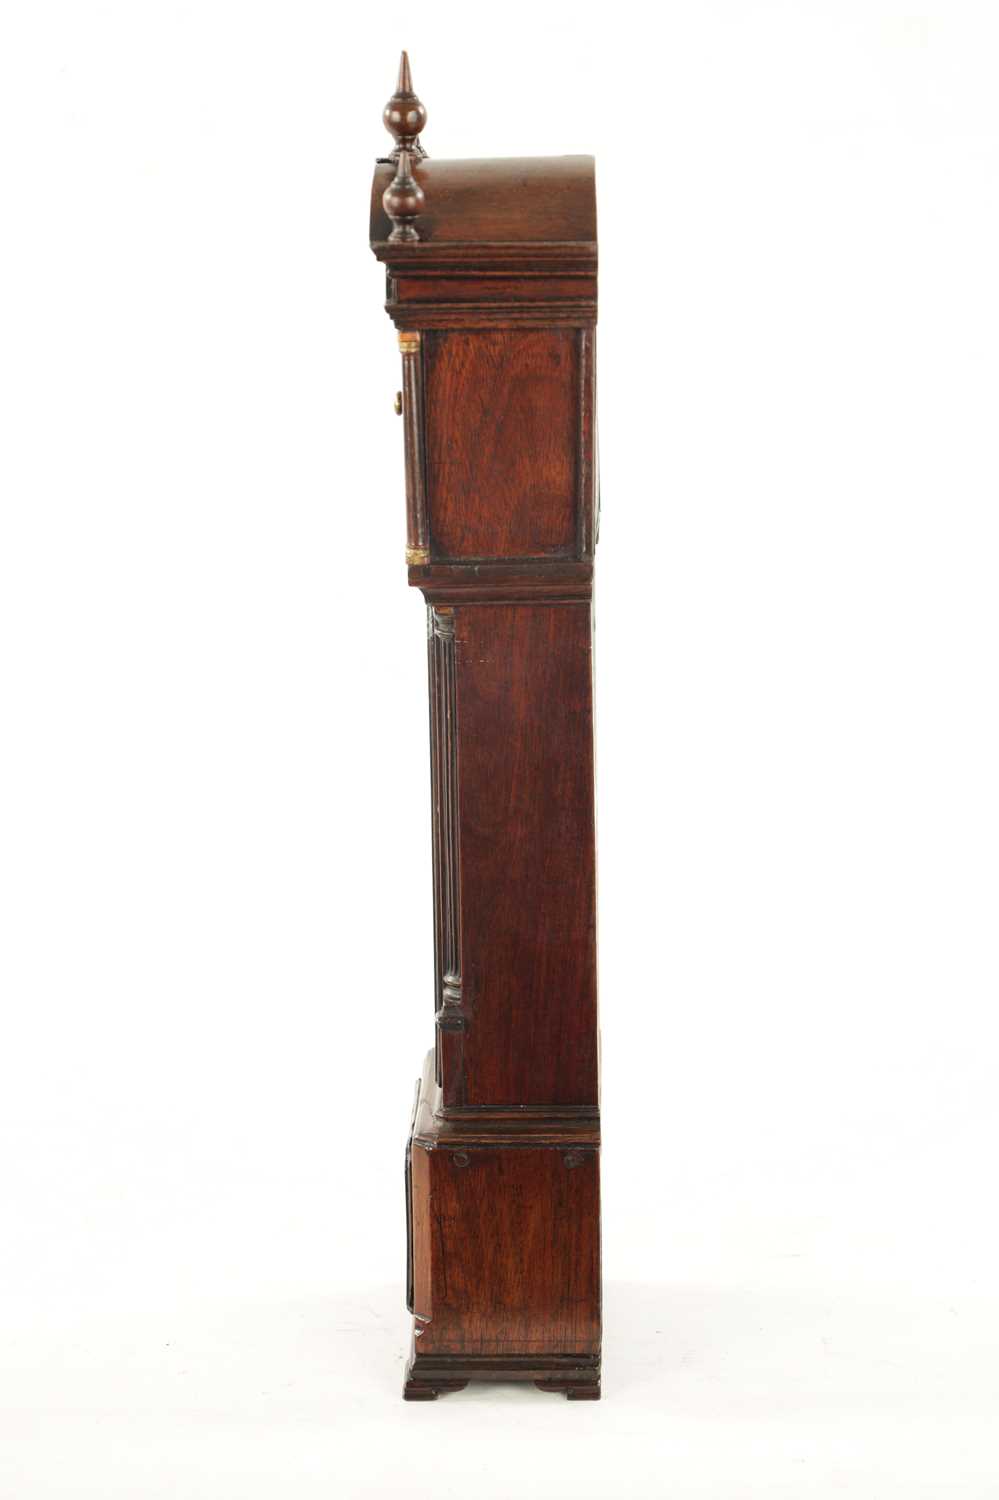 A RARE 18TH CENTURY MAHOGANY POCKET WATCH HOLDER FORMED AS A LIVERPOOL LONGCASE CLOCK - Image 4 of 10